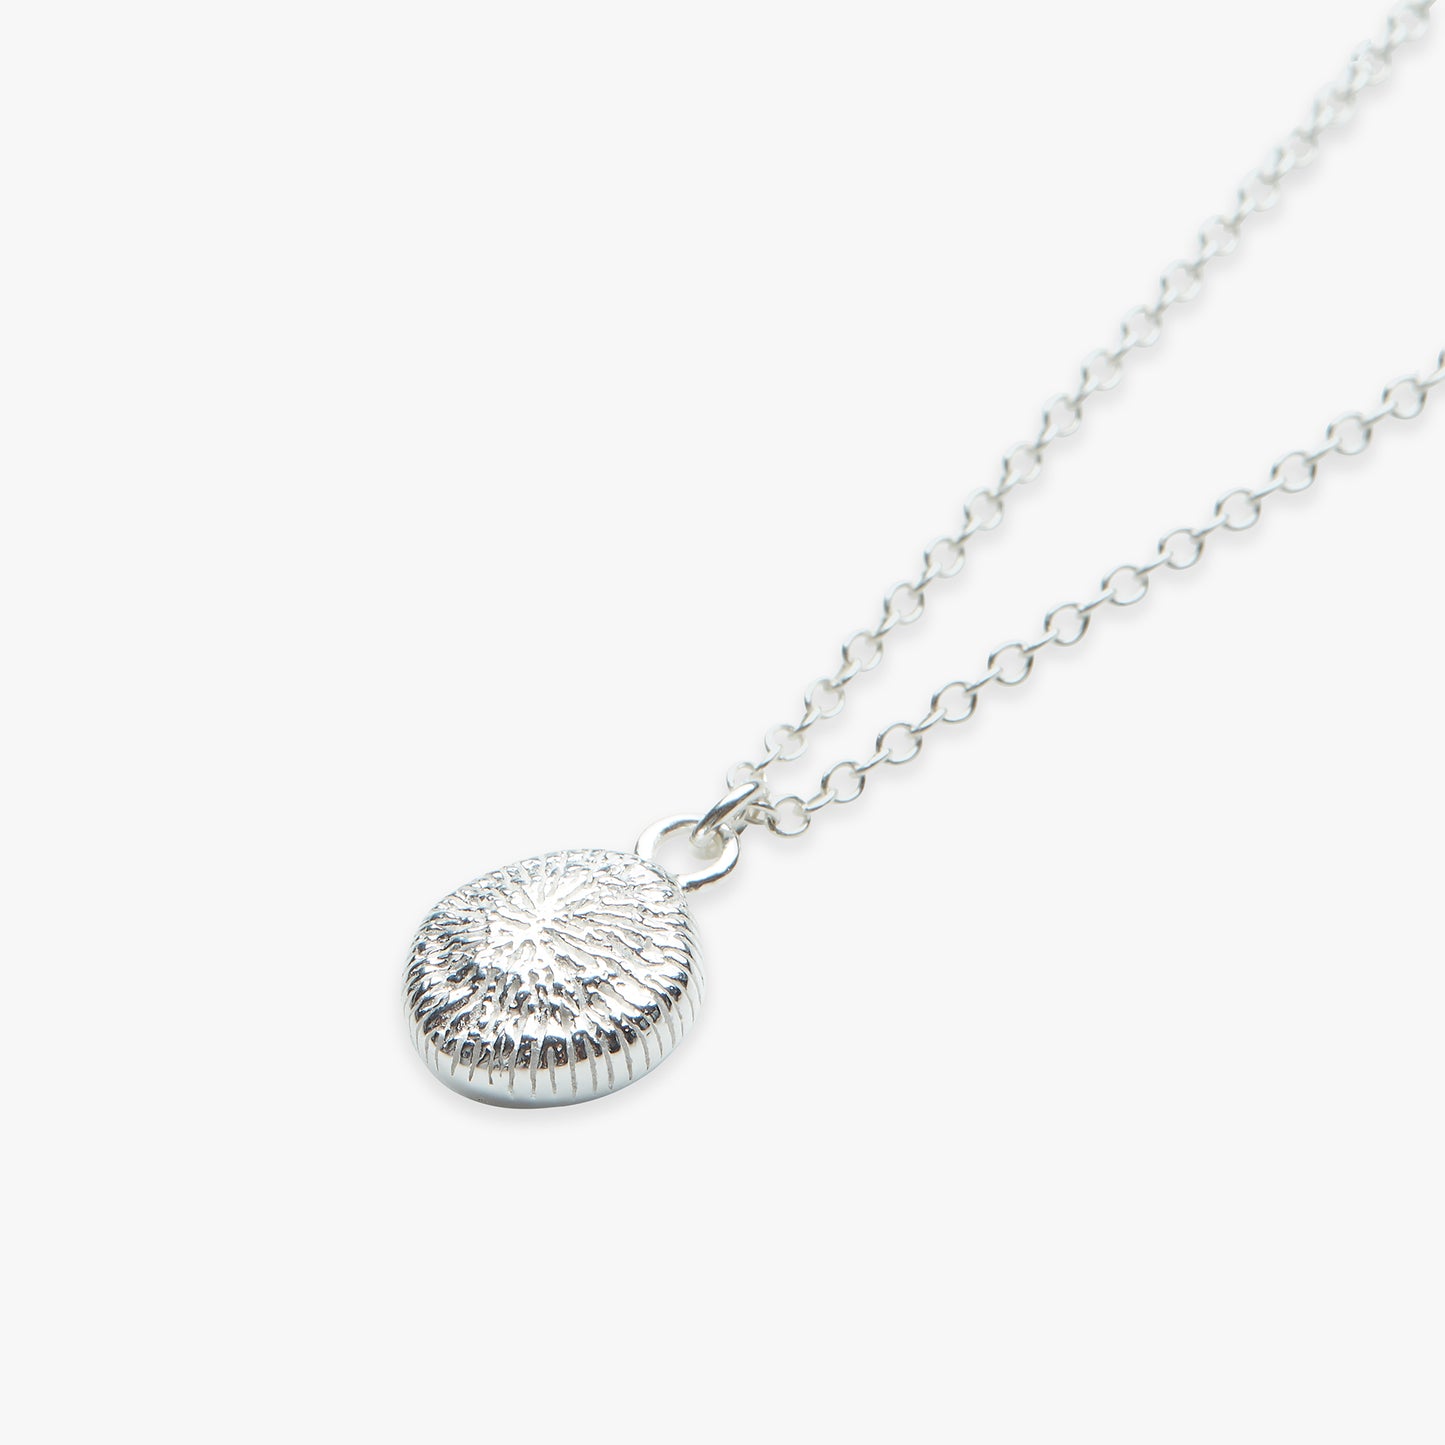 Sunshine Coral necklace silver